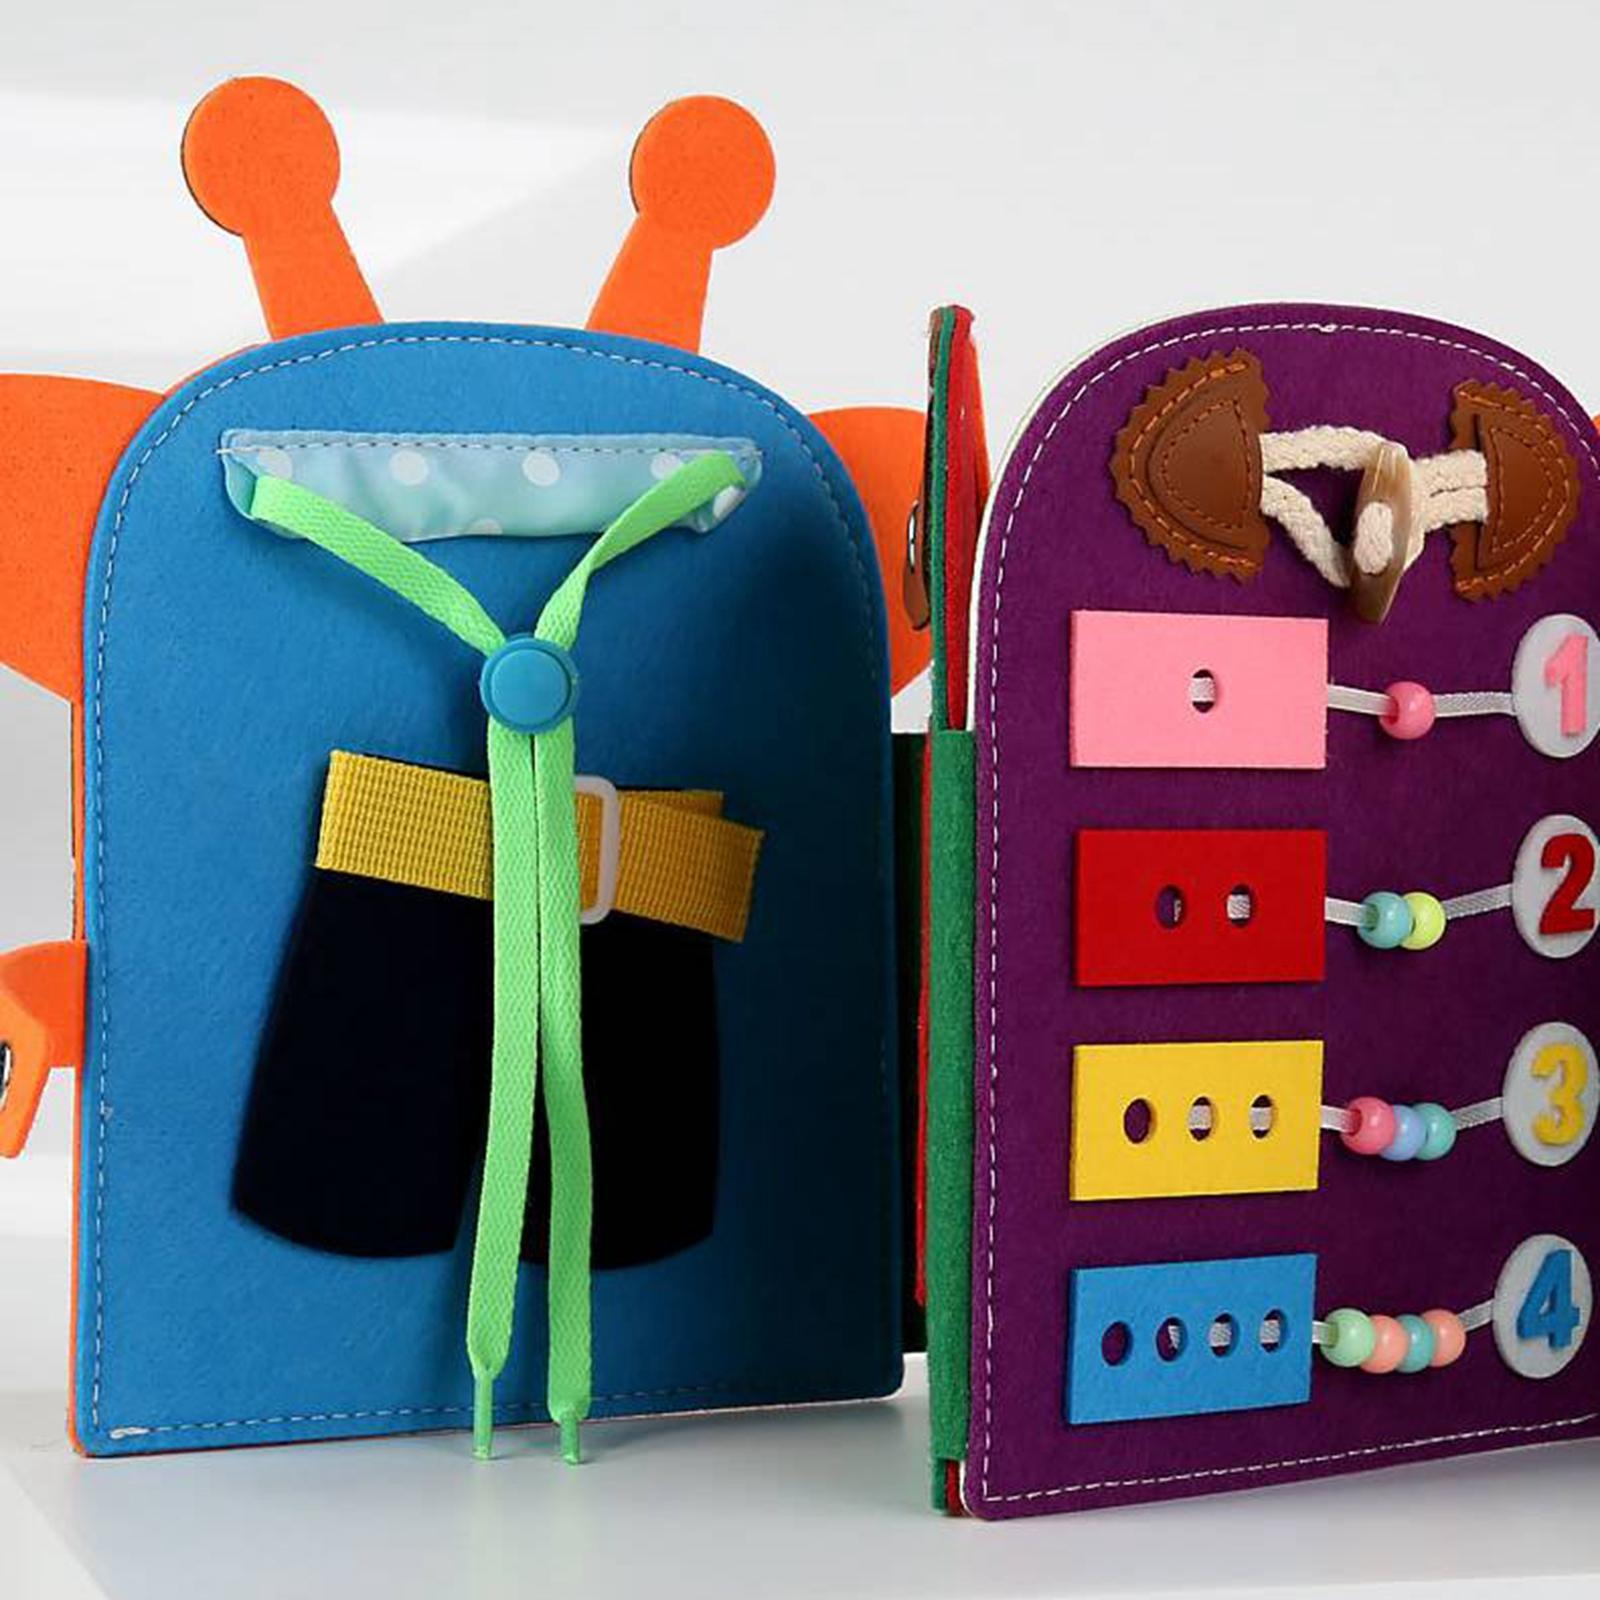 Montessori Busy Board Learning Activity Toy Sensory Board for Preschool Kids